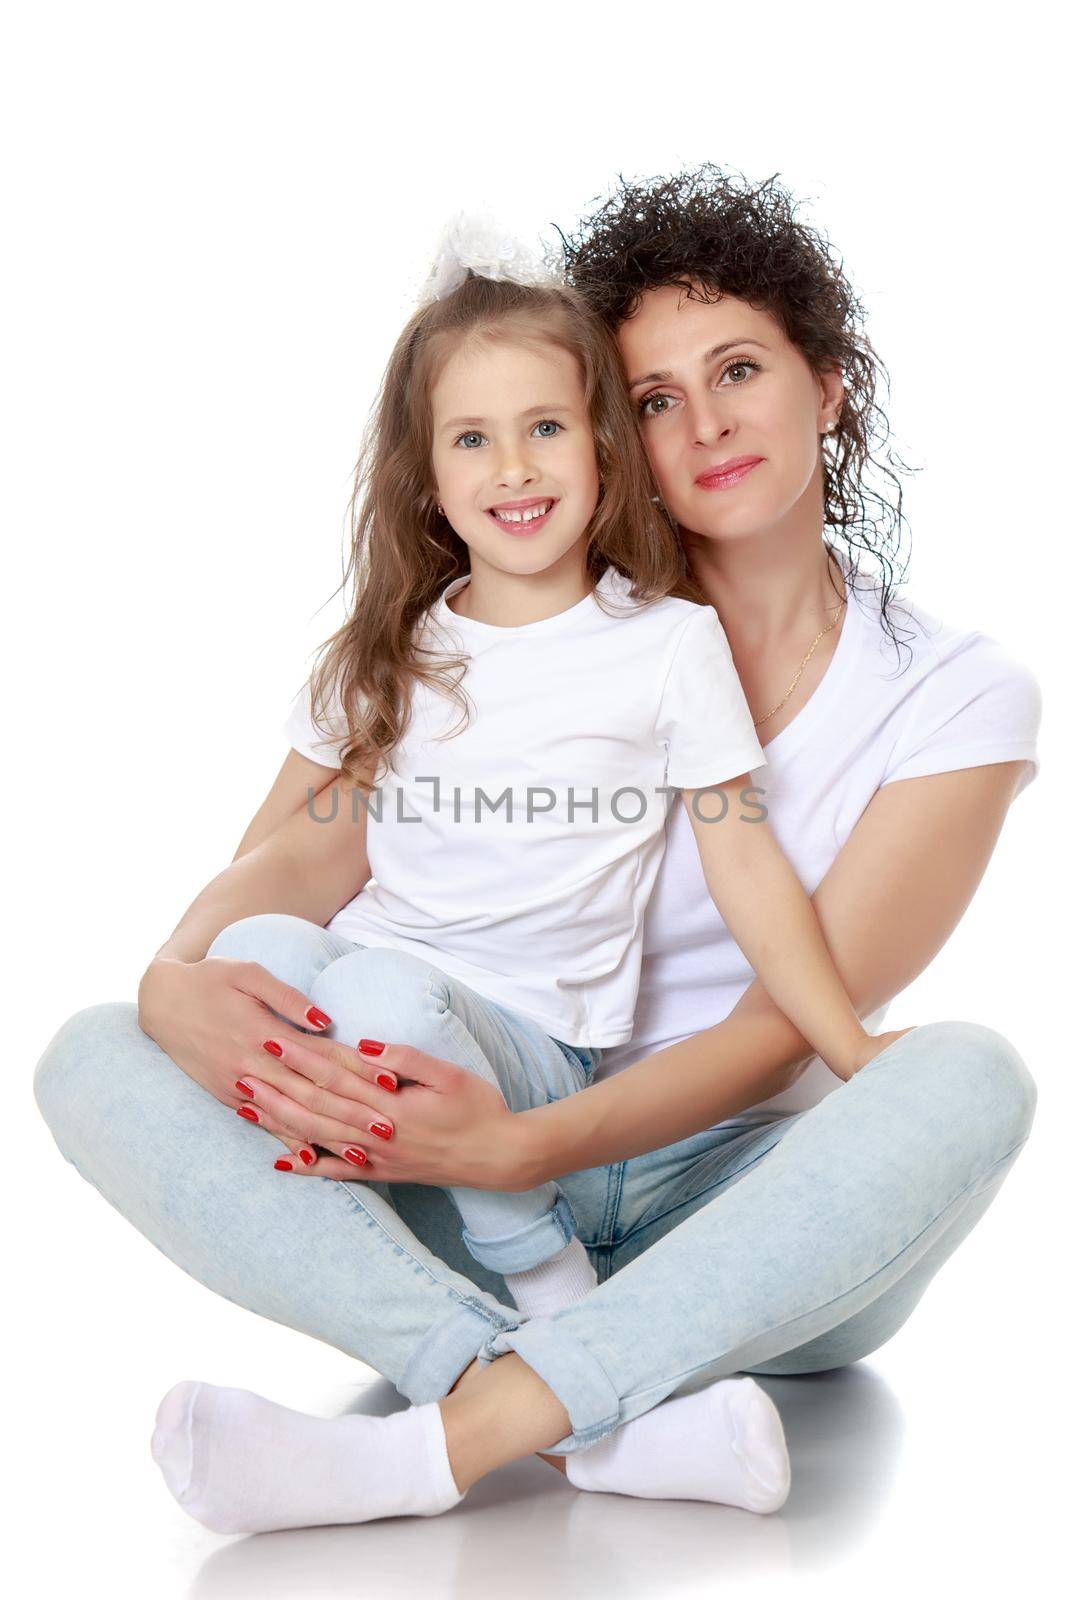 Mom and daughter in the arms by kolesnikov_studio